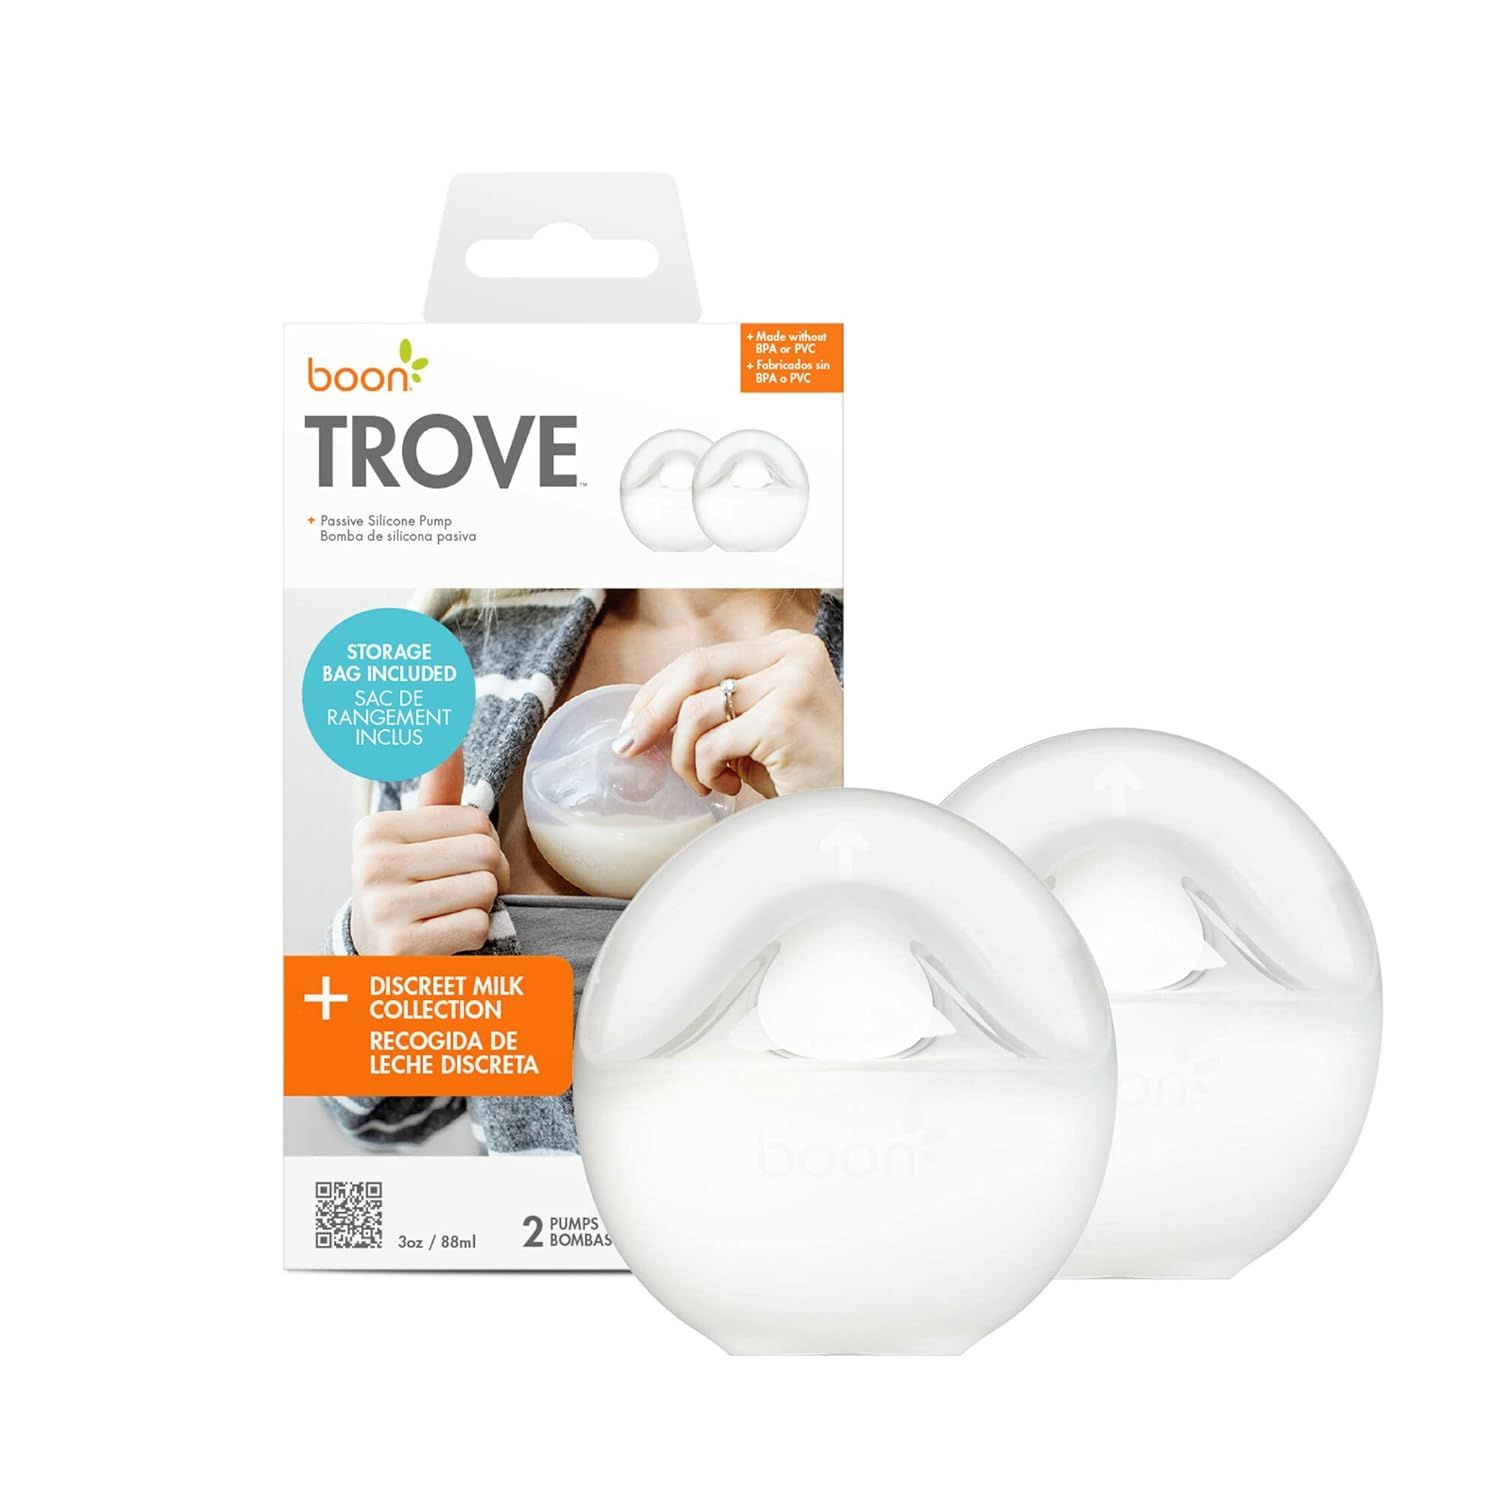 Boon TROVE Silicone Manual Breast Pump with Travel Pouch - Hands Free Breast Pump - Passive Breas... | Amazon (US)